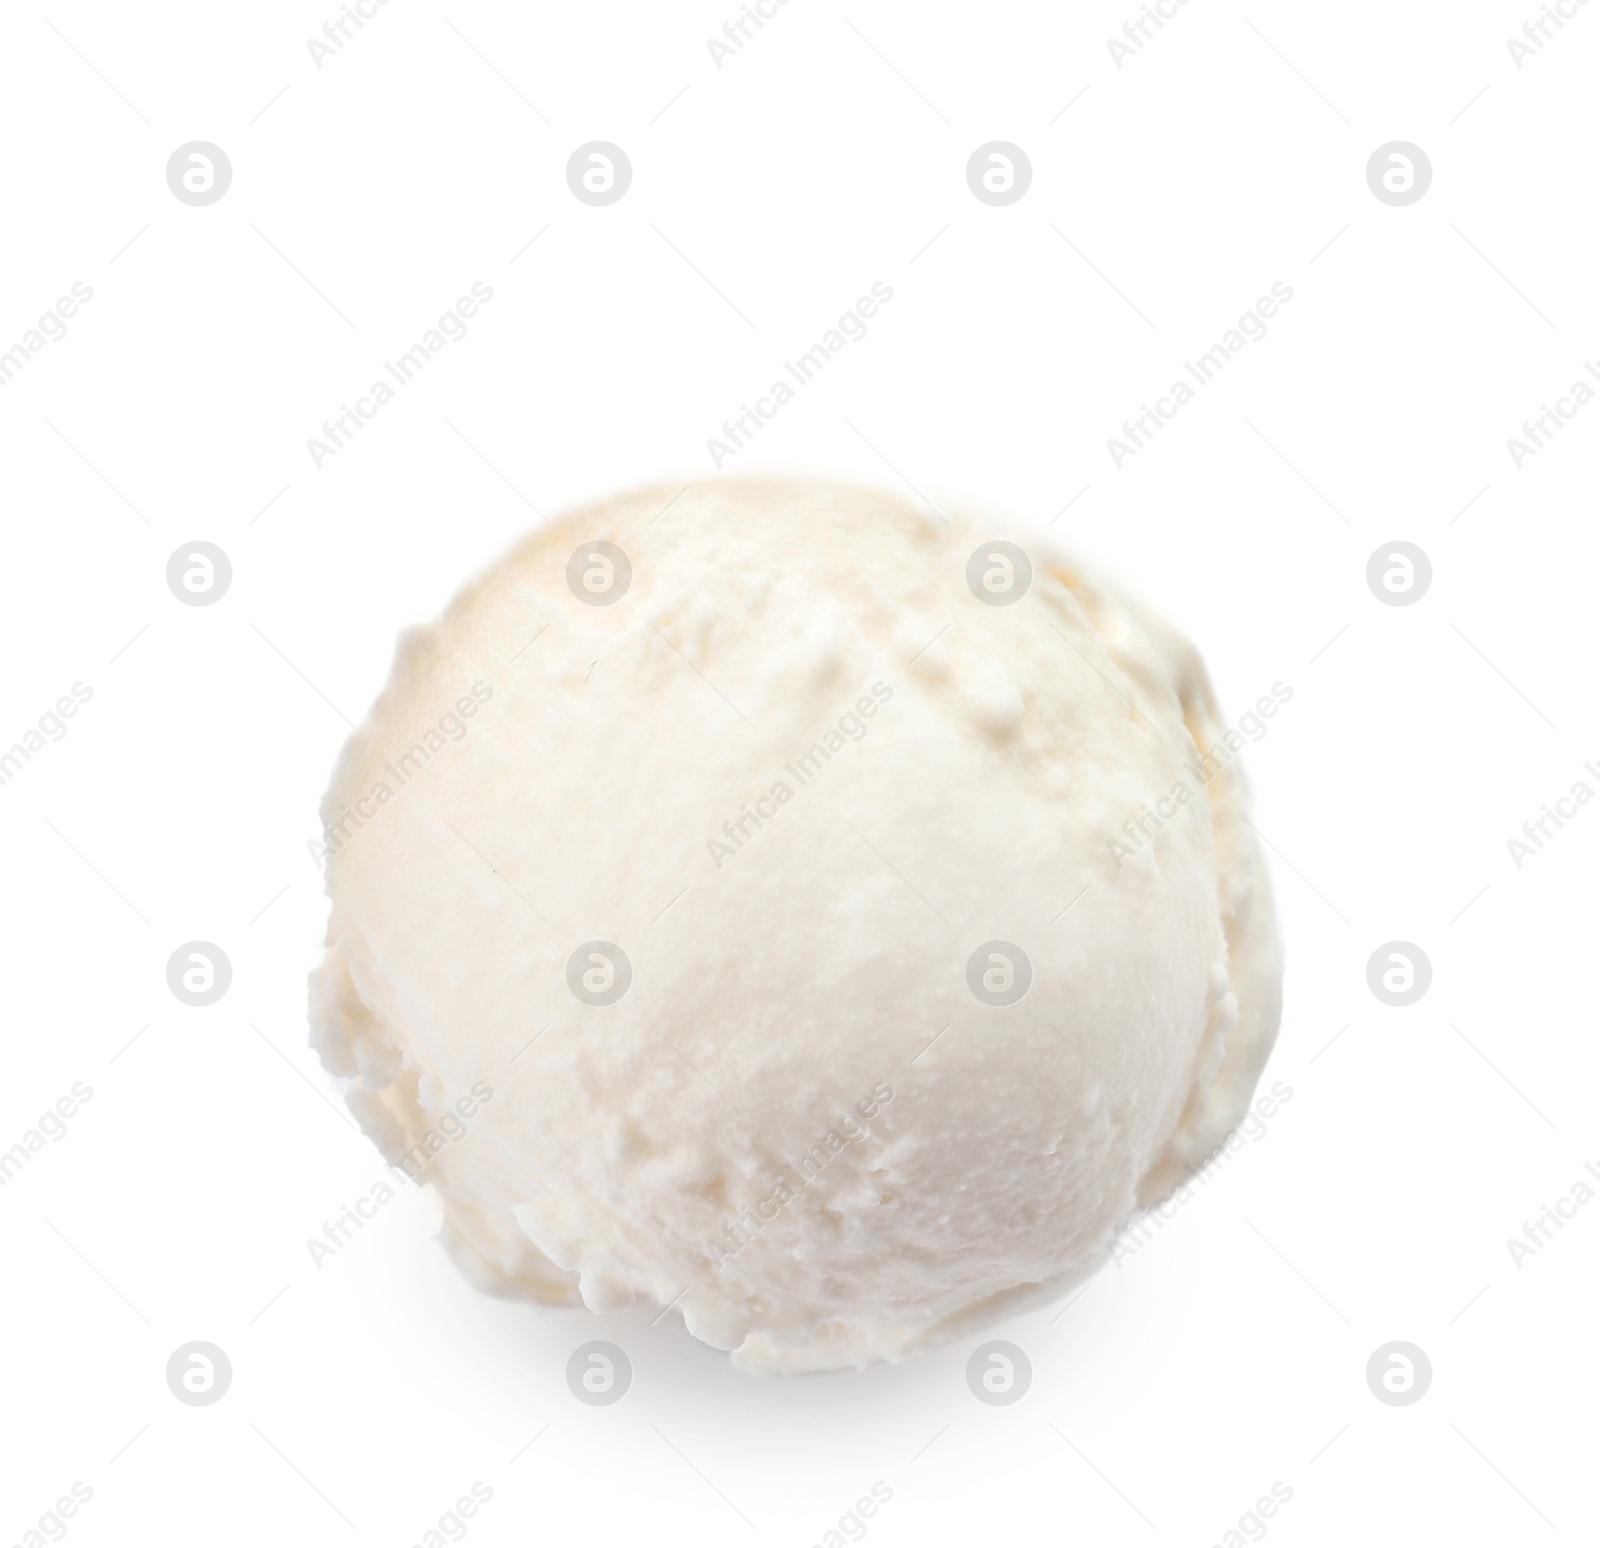 Photo of Ball of tasty vanilla ice cream on white background